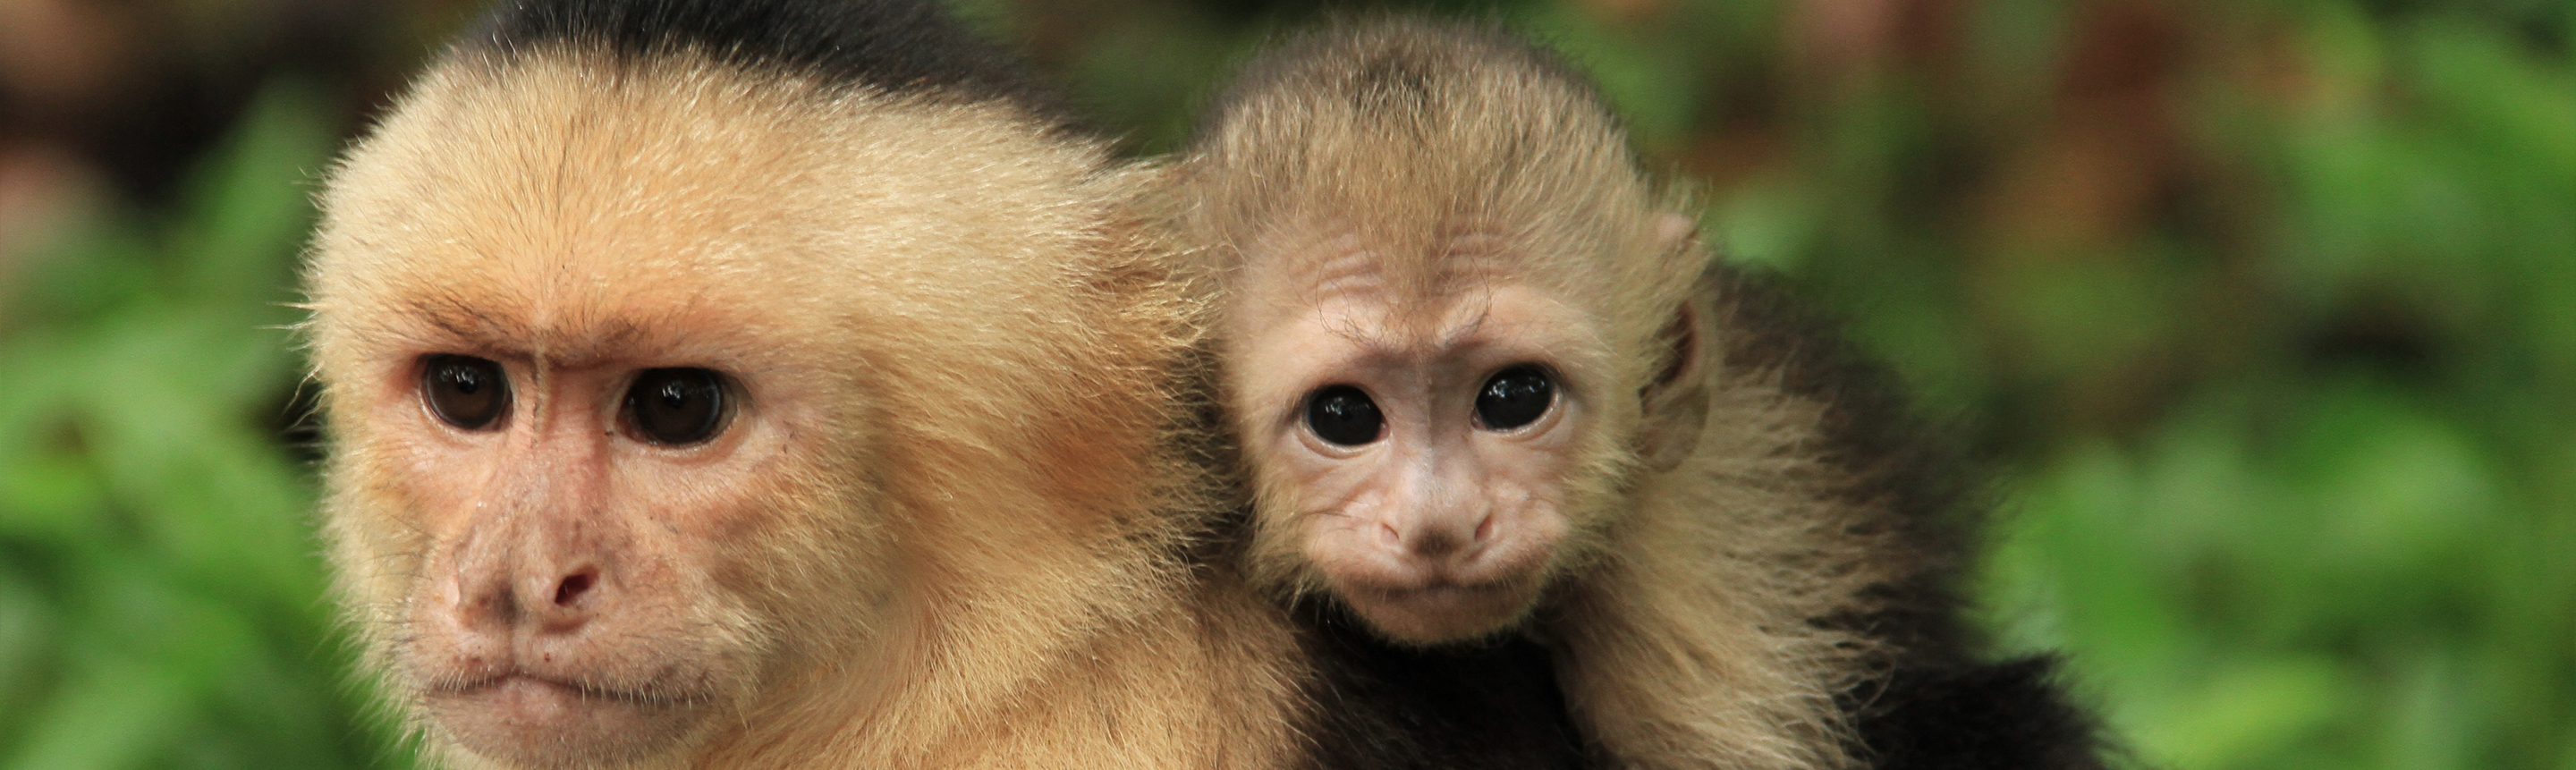 Capuchin Facts Costa Rica Wildlife Guide